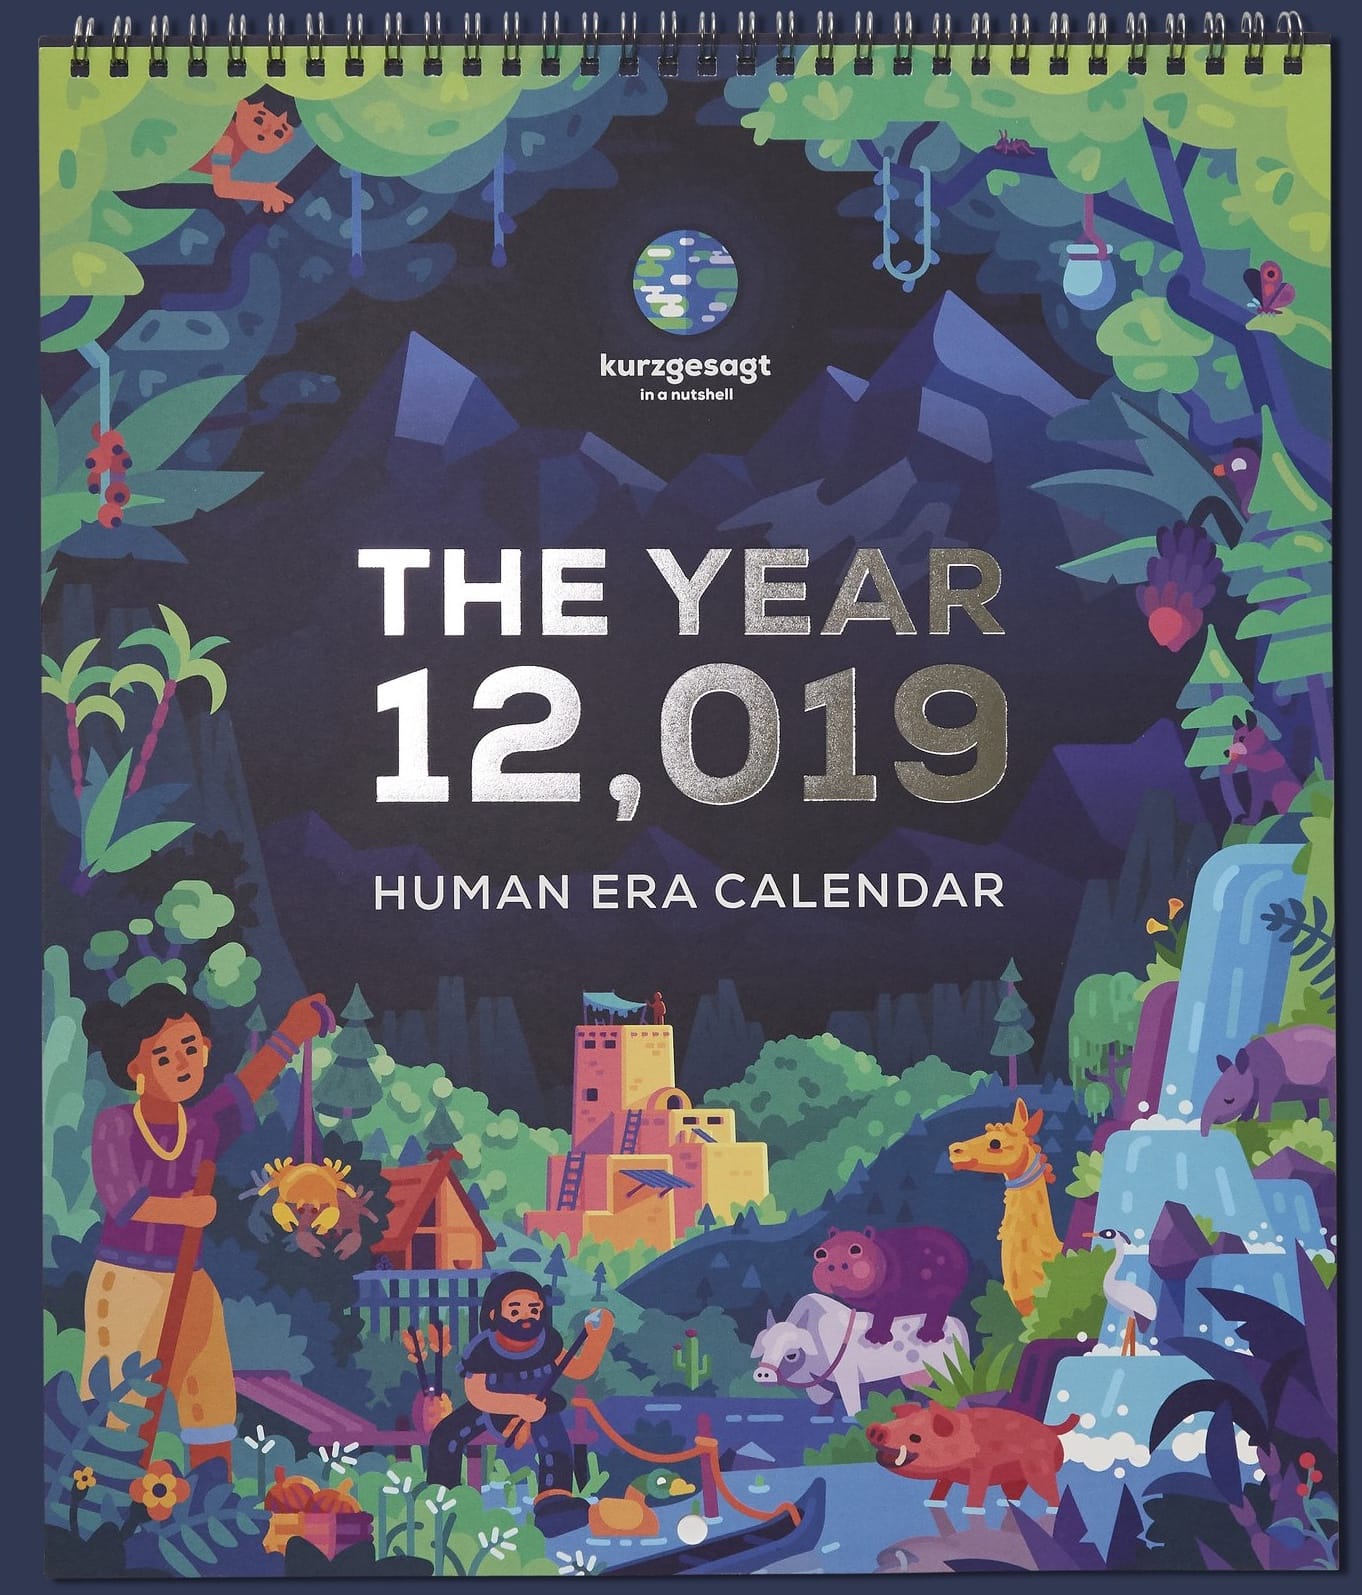 The 12019 Human Era Calendar